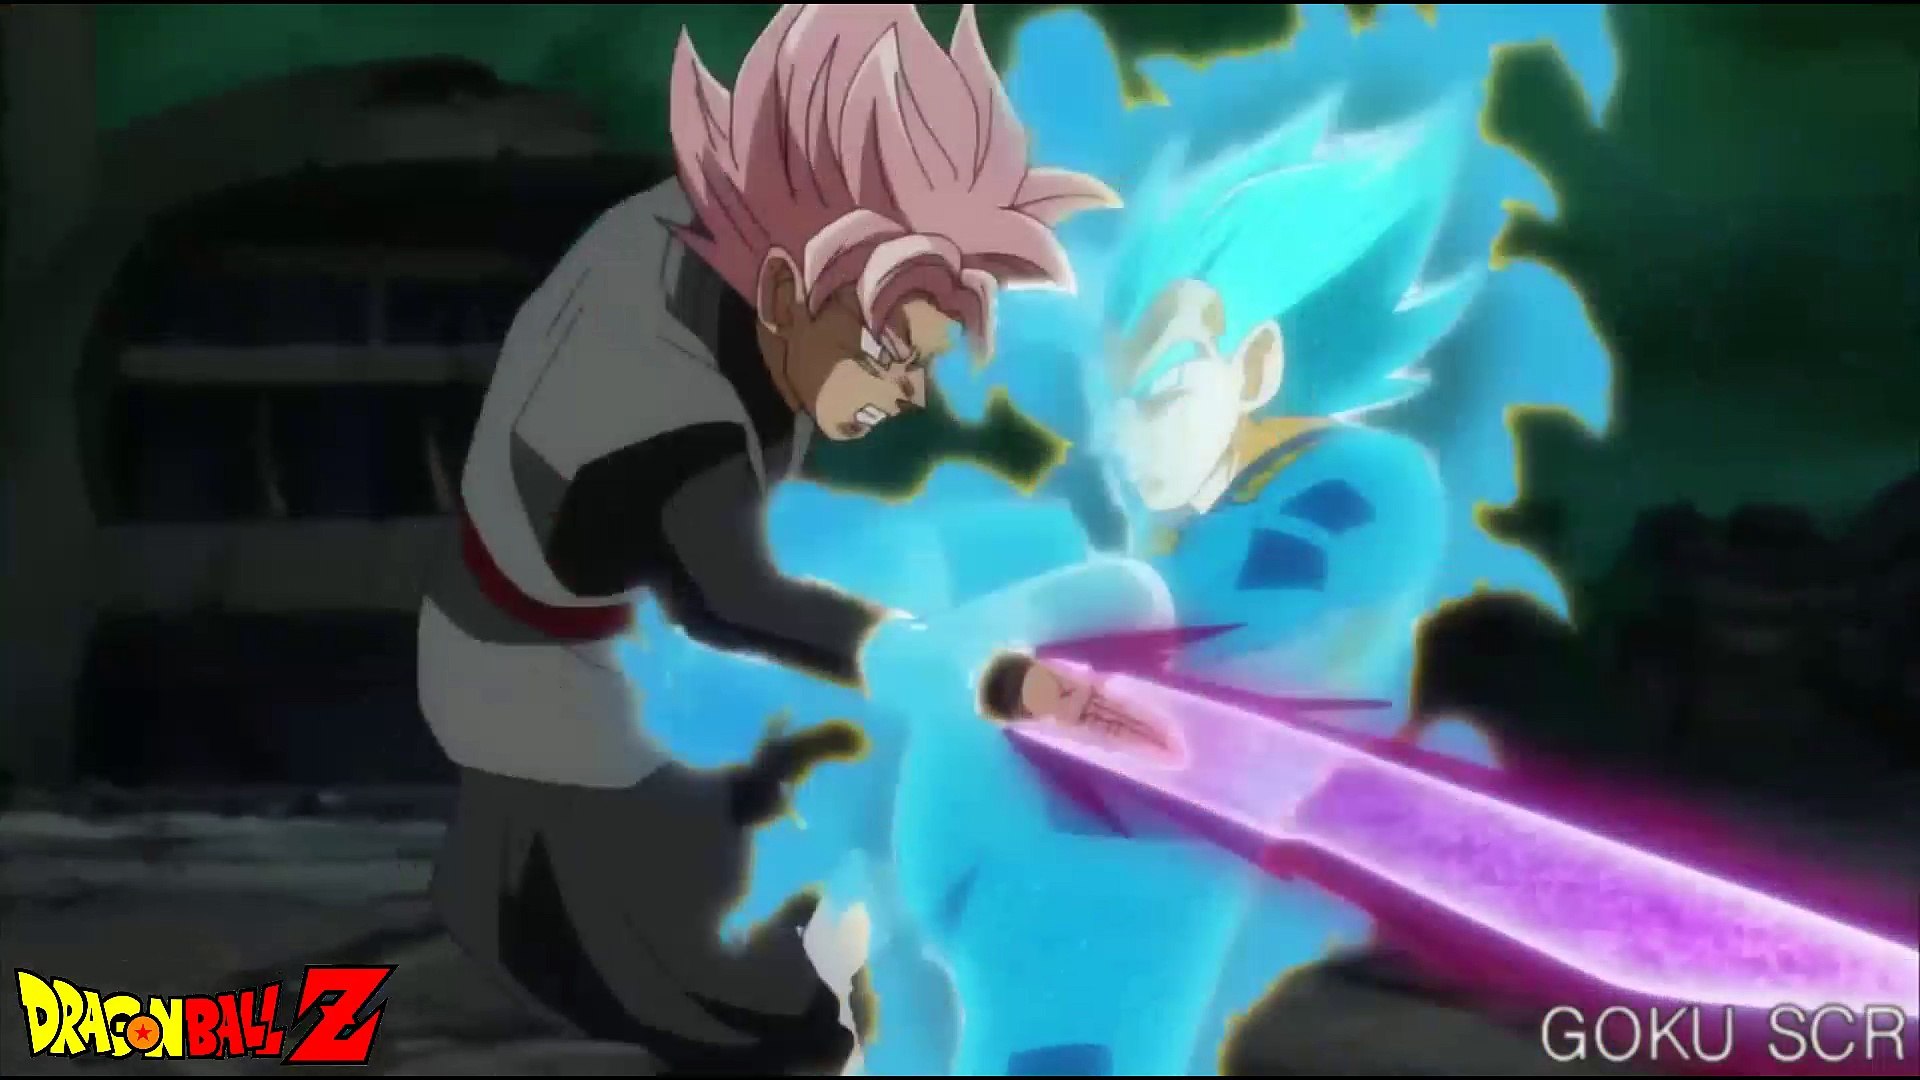 Vegeta vs Goku Black luta completa legendado em HD - Vídeo Dailymotion